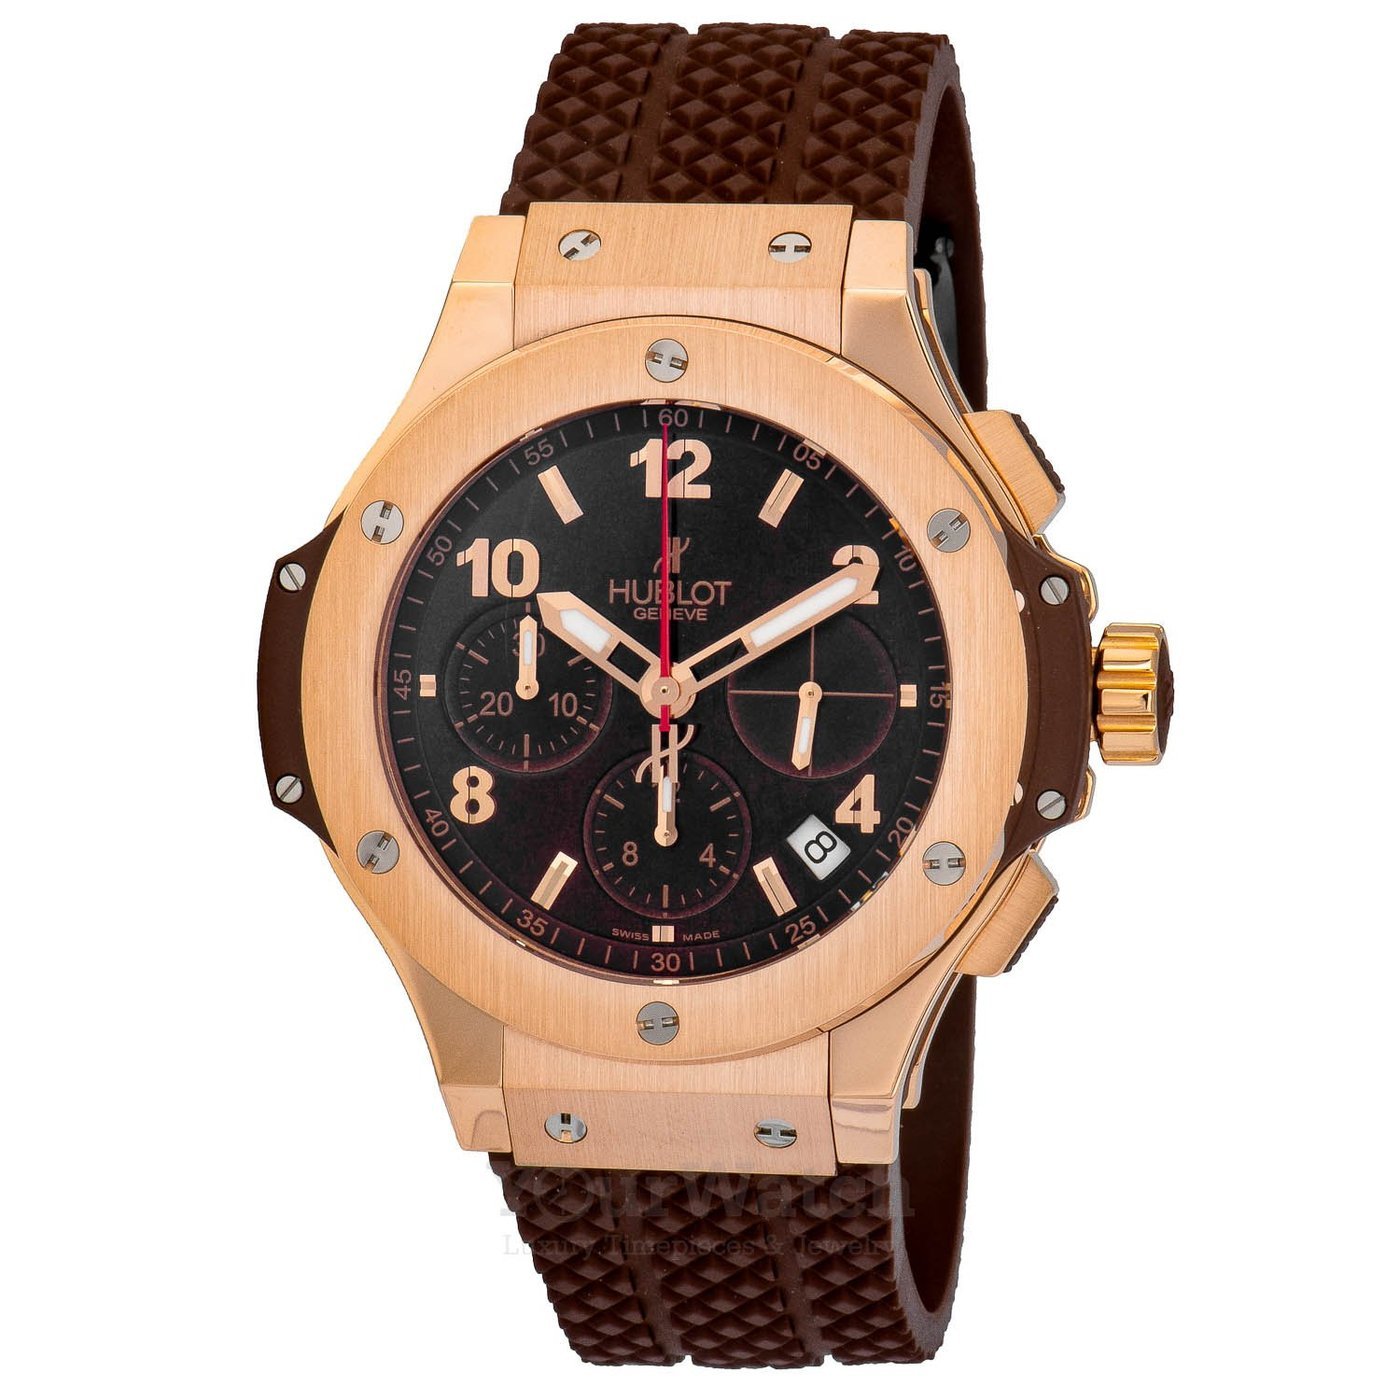 Hublot-Big-Bang-Cappuccino-Gold-41mm-Mens-Watch-341.PC.1007.RX-Yourwatch